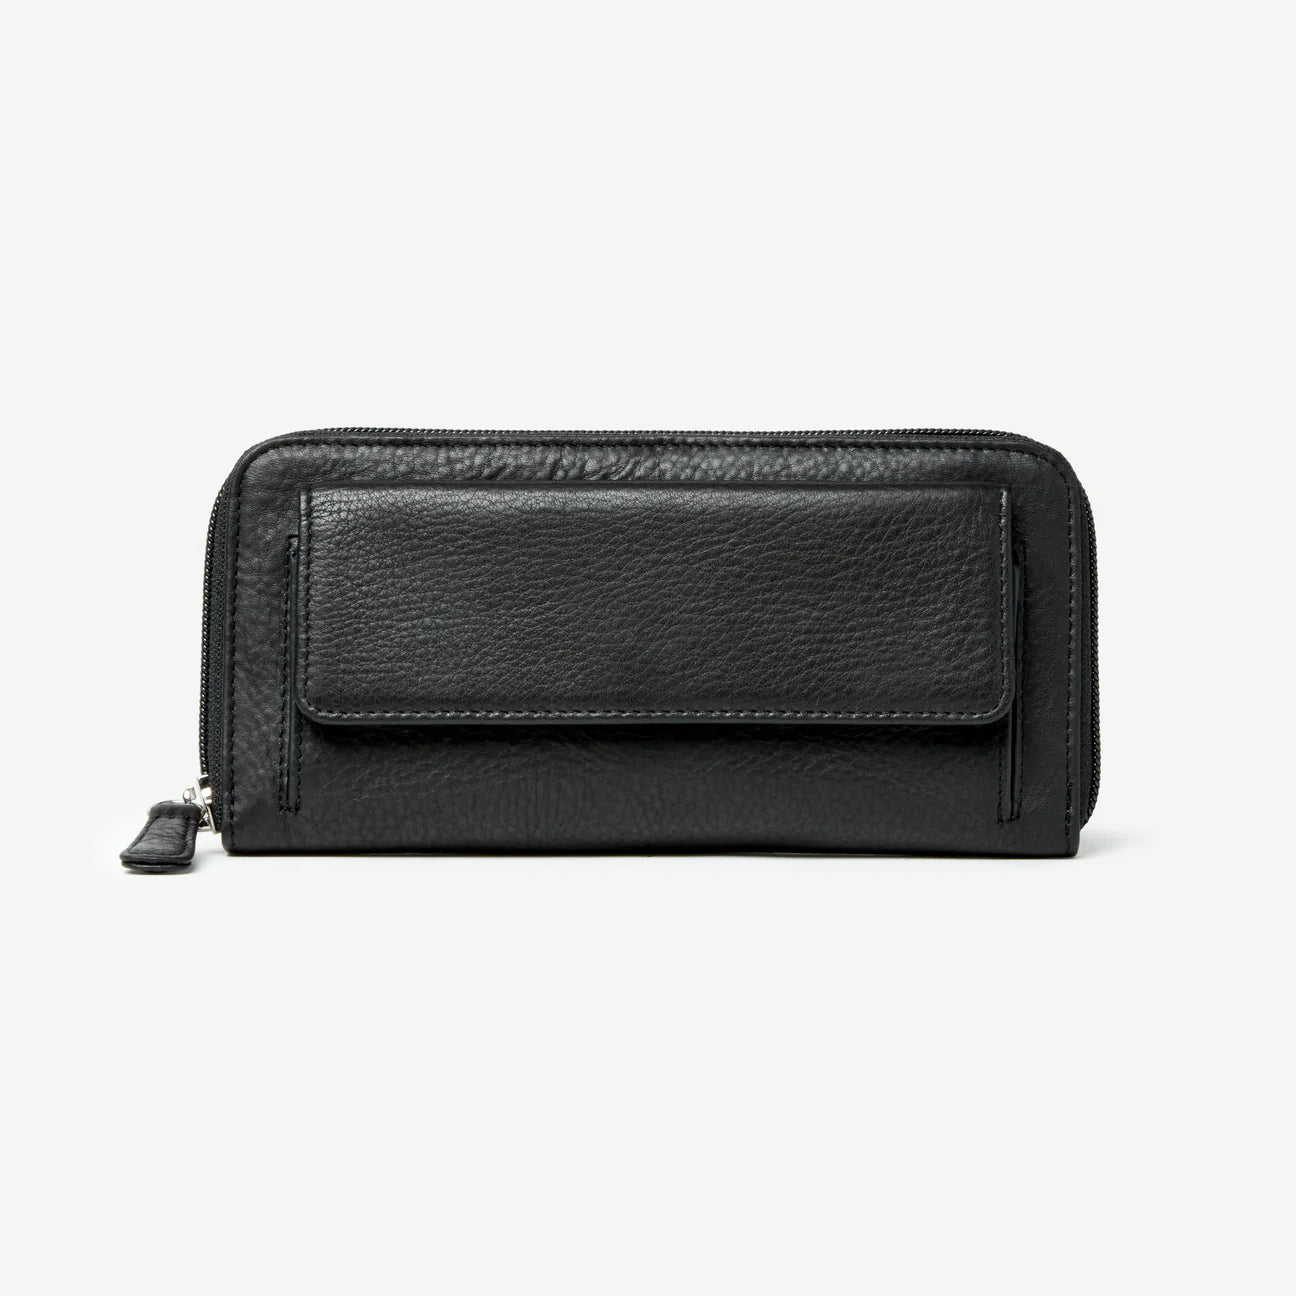 Osgoode Marley Leather RFID ZIP AROUND Wallet